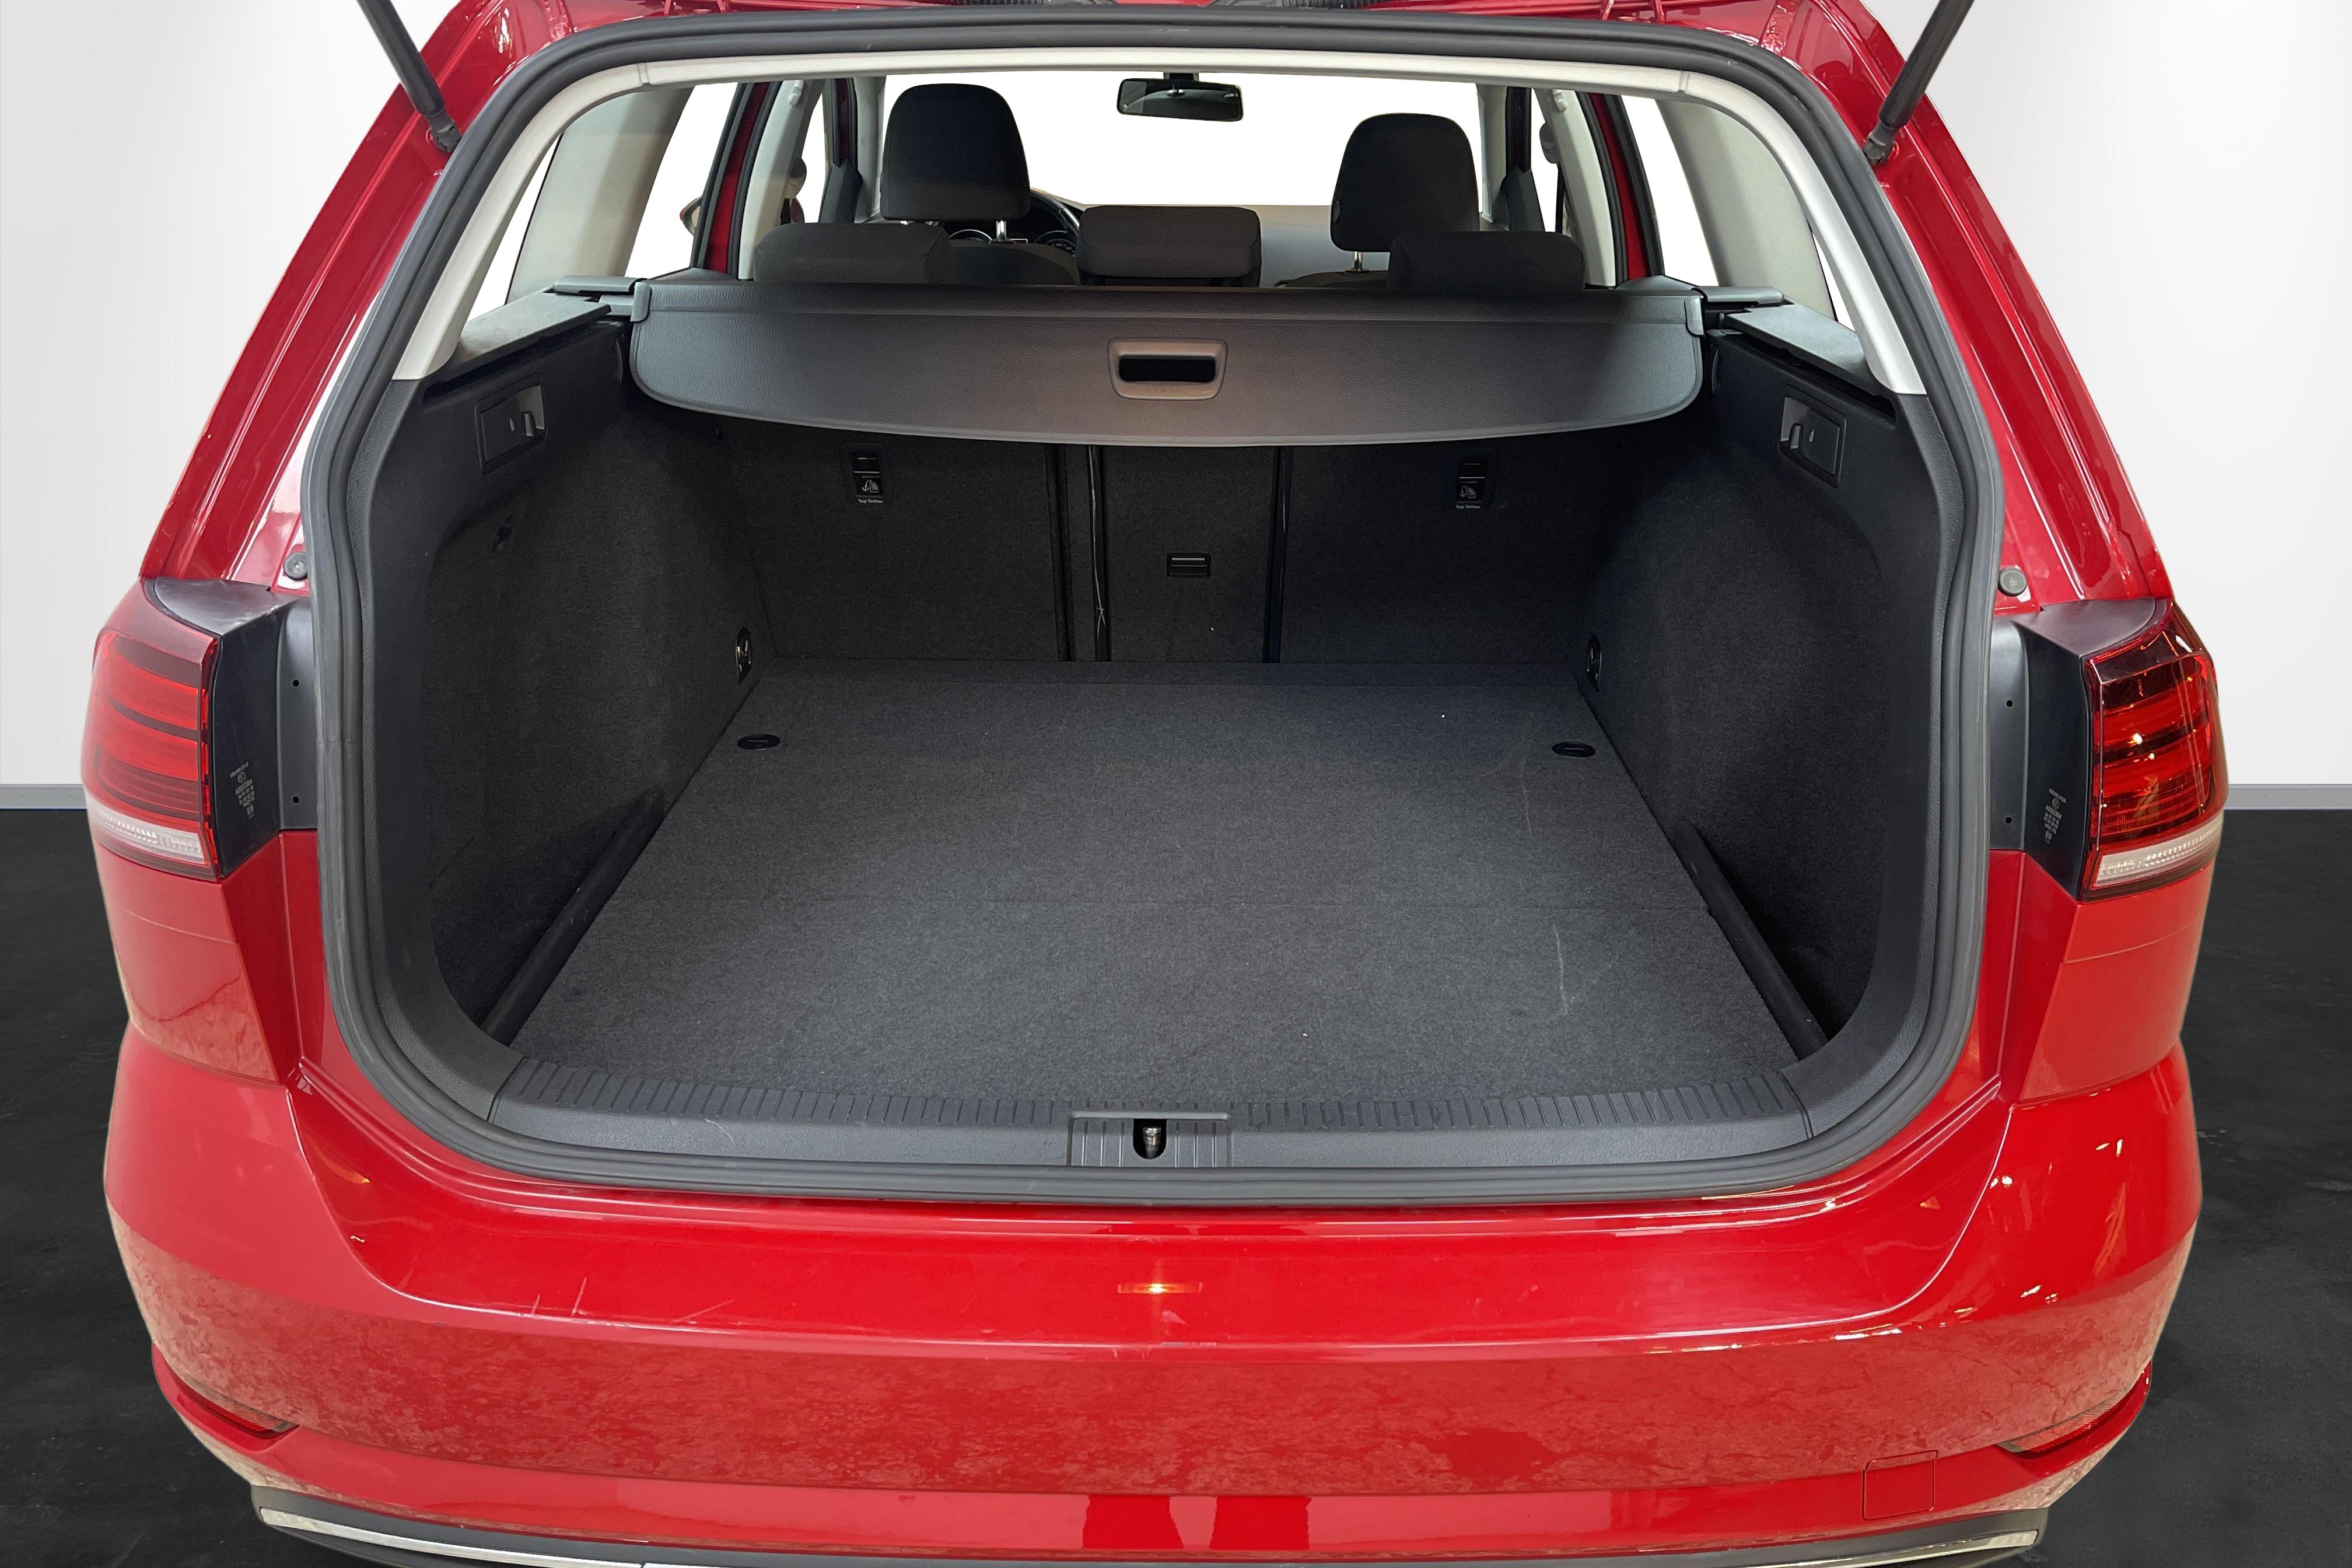 VW Golf VII 1.5 TGI Sportscombi (130hk) - 48 270 km - Manual - red - 2019